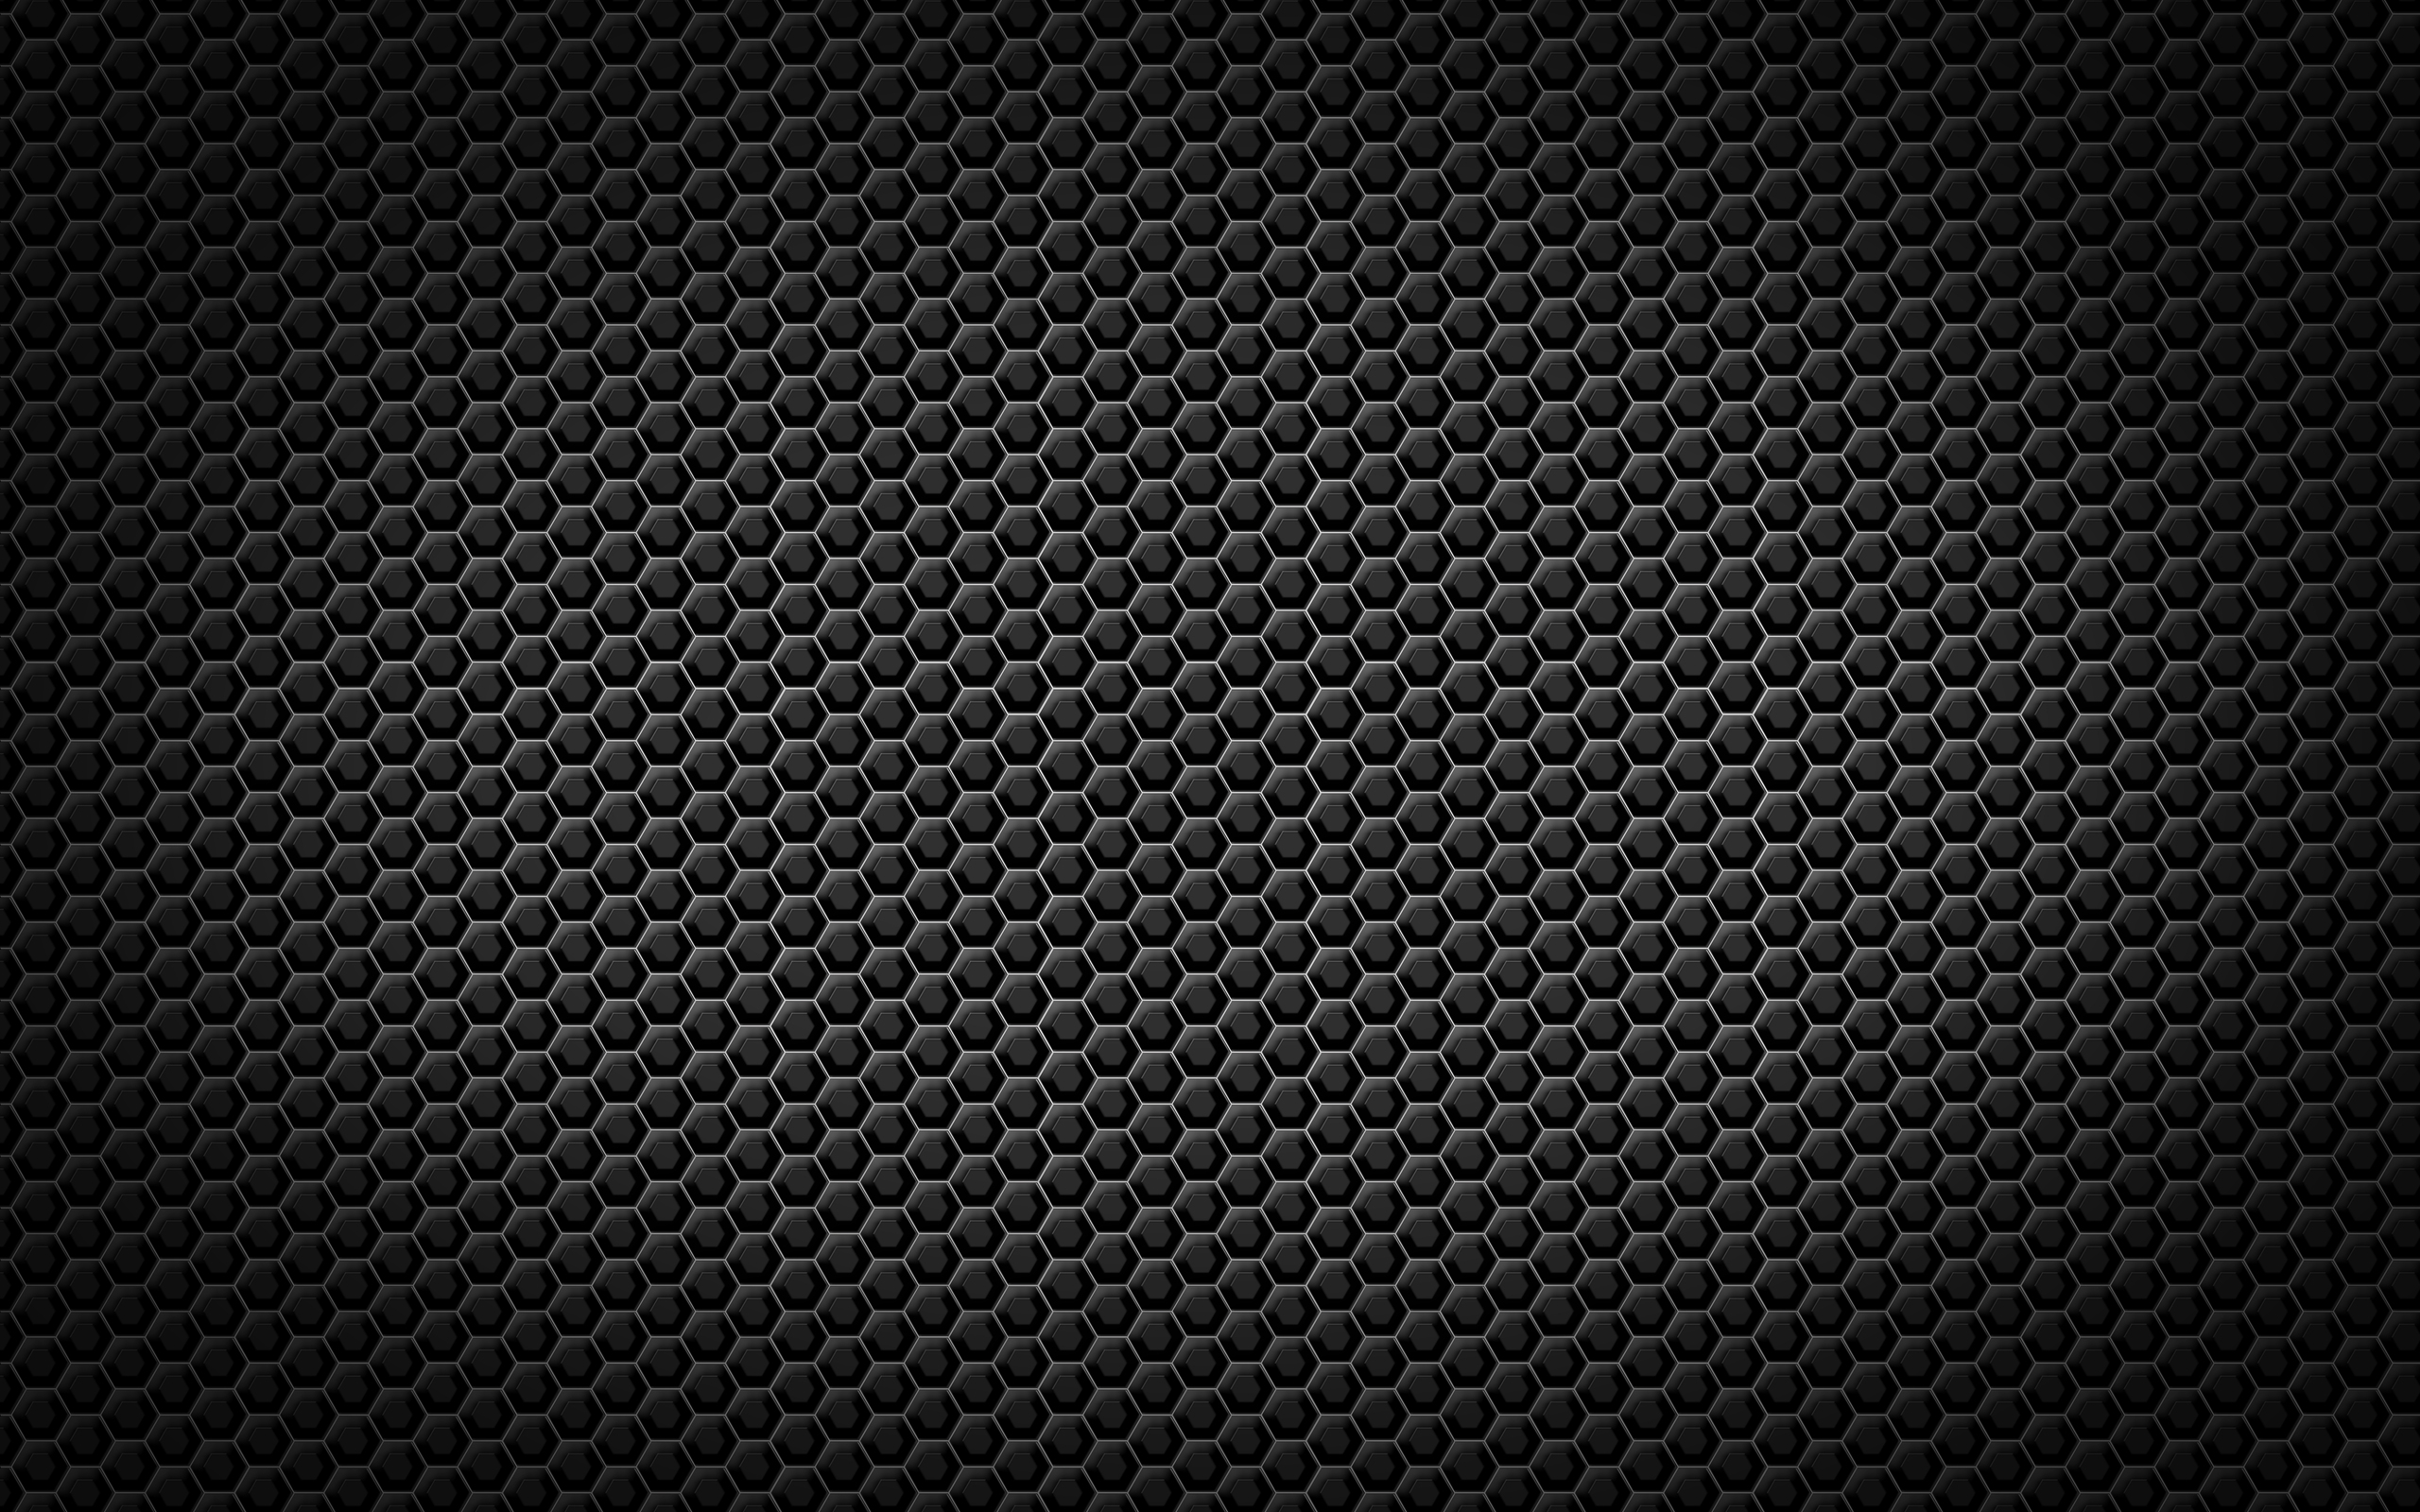 Digital blasphemy black wallpaper rose backgrounds pattern   1073022